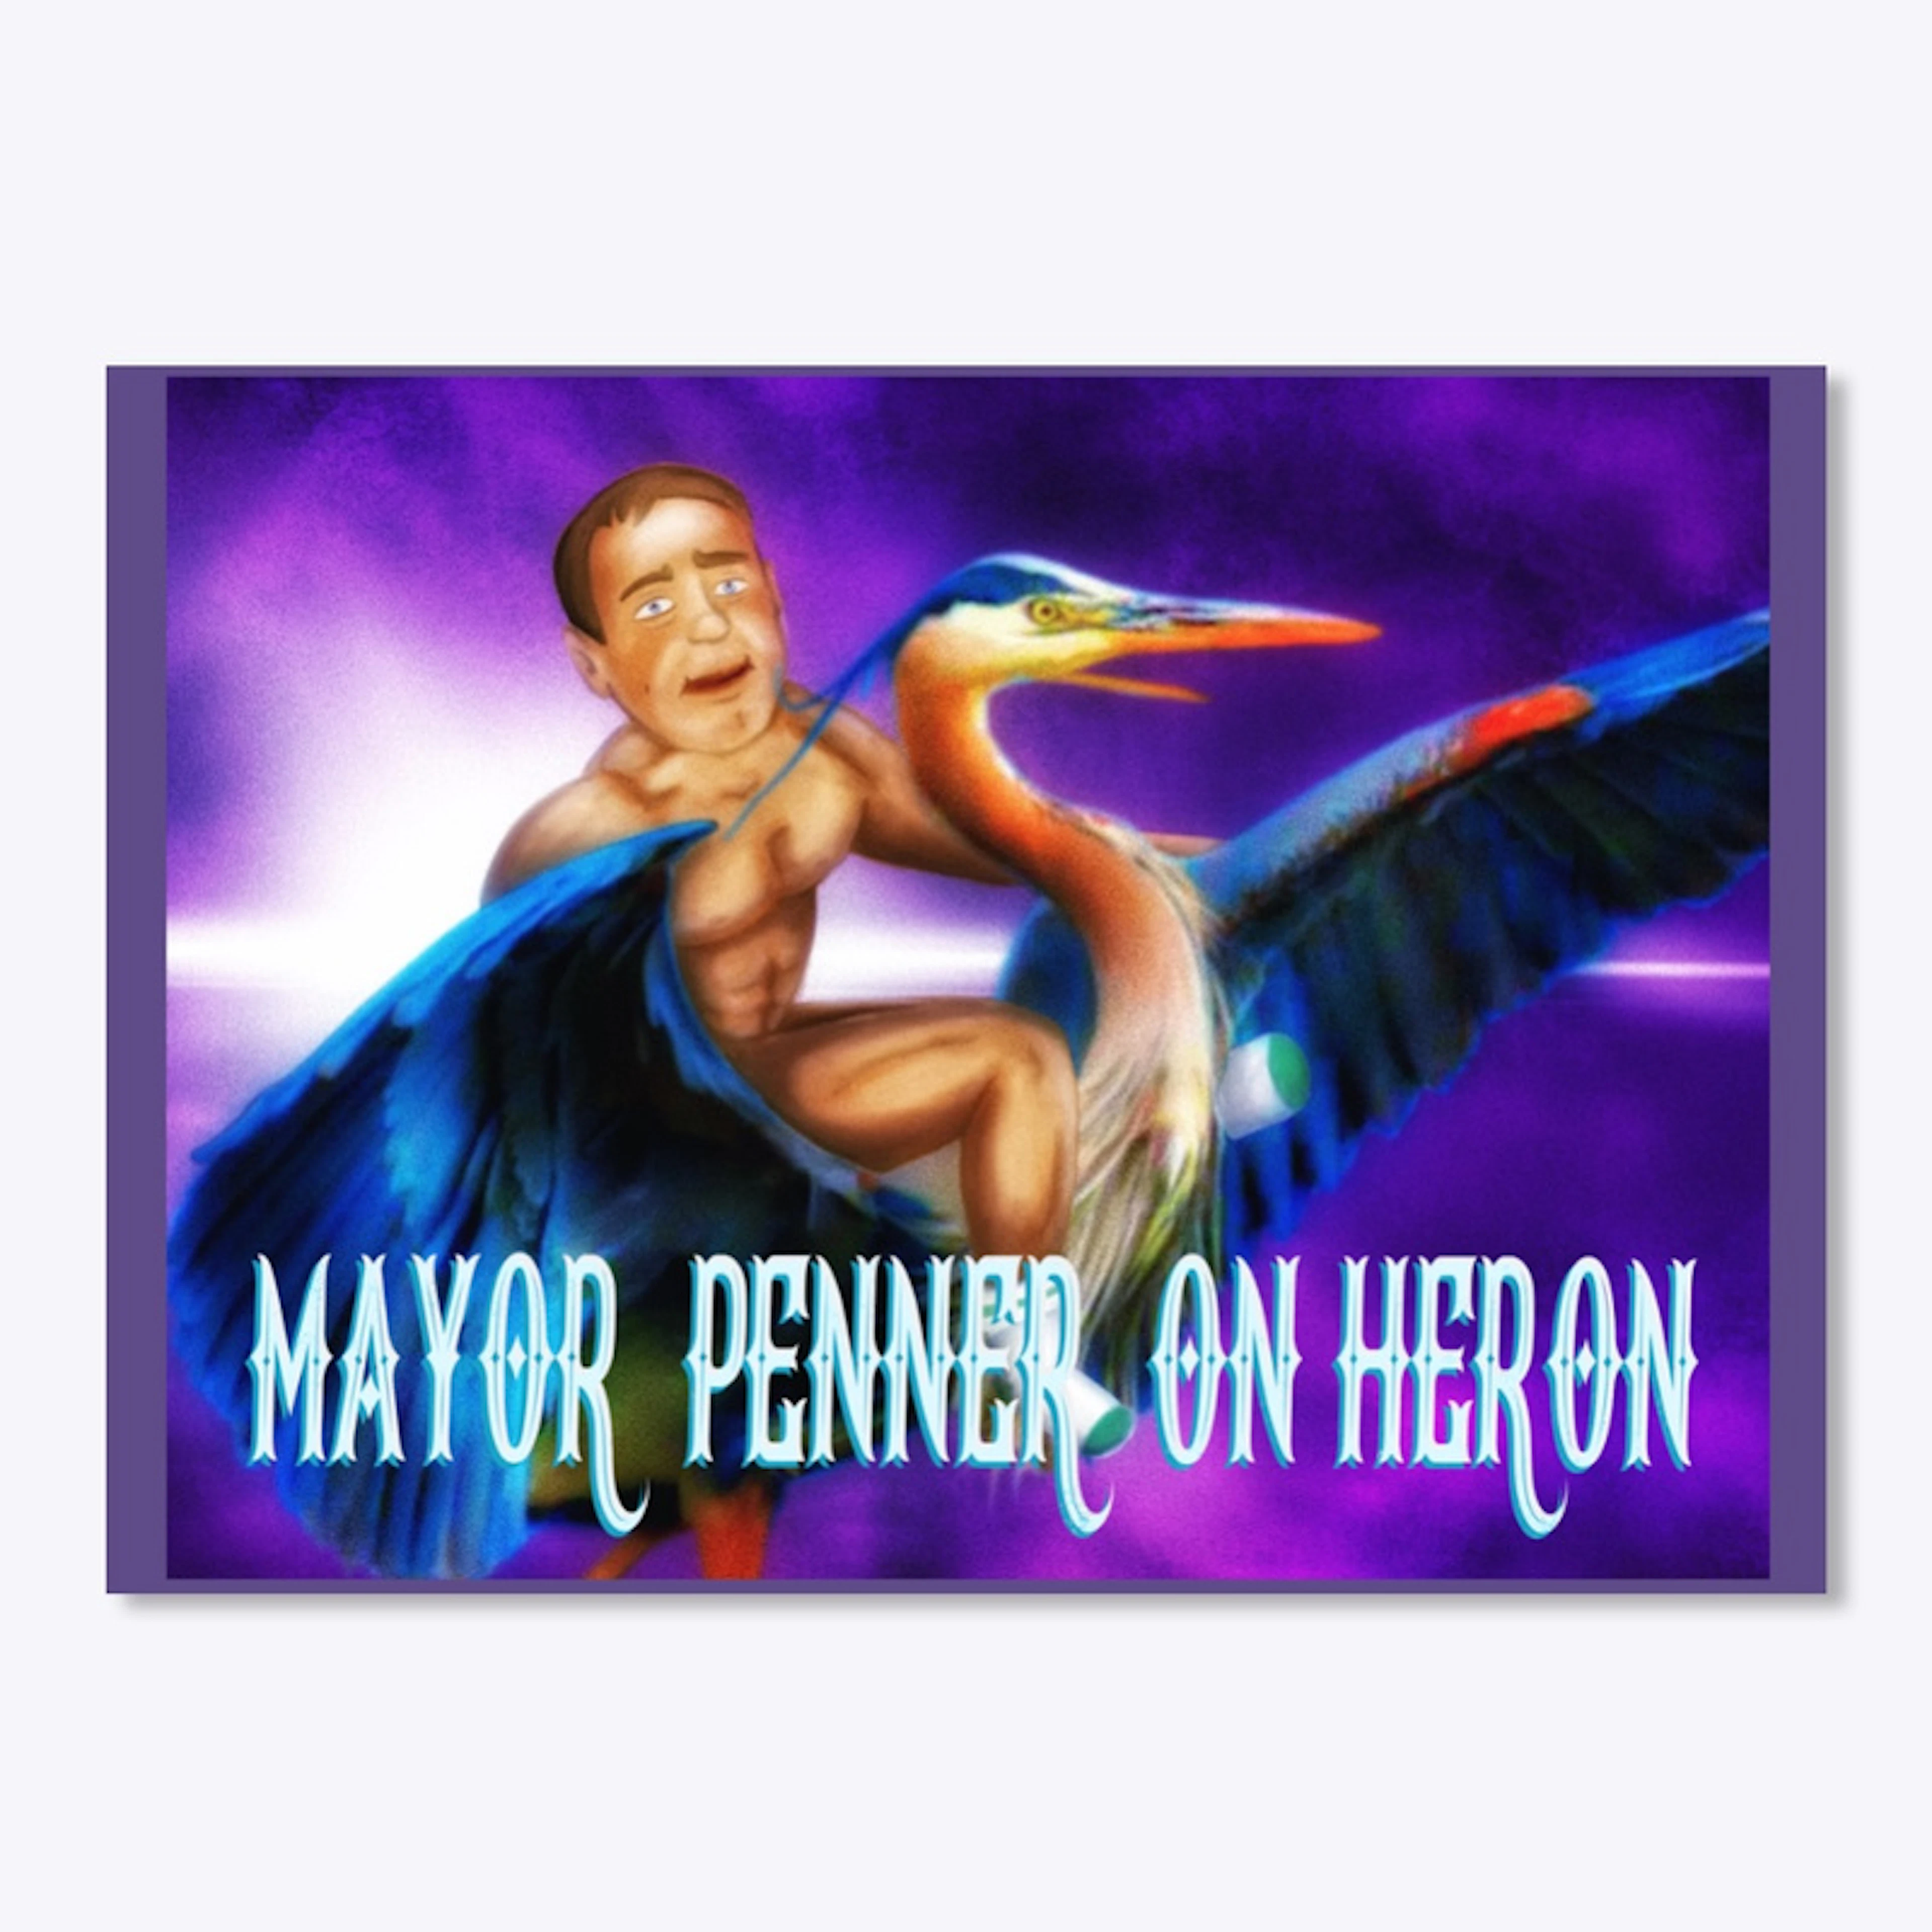 Mayor Penner on Heron (text)